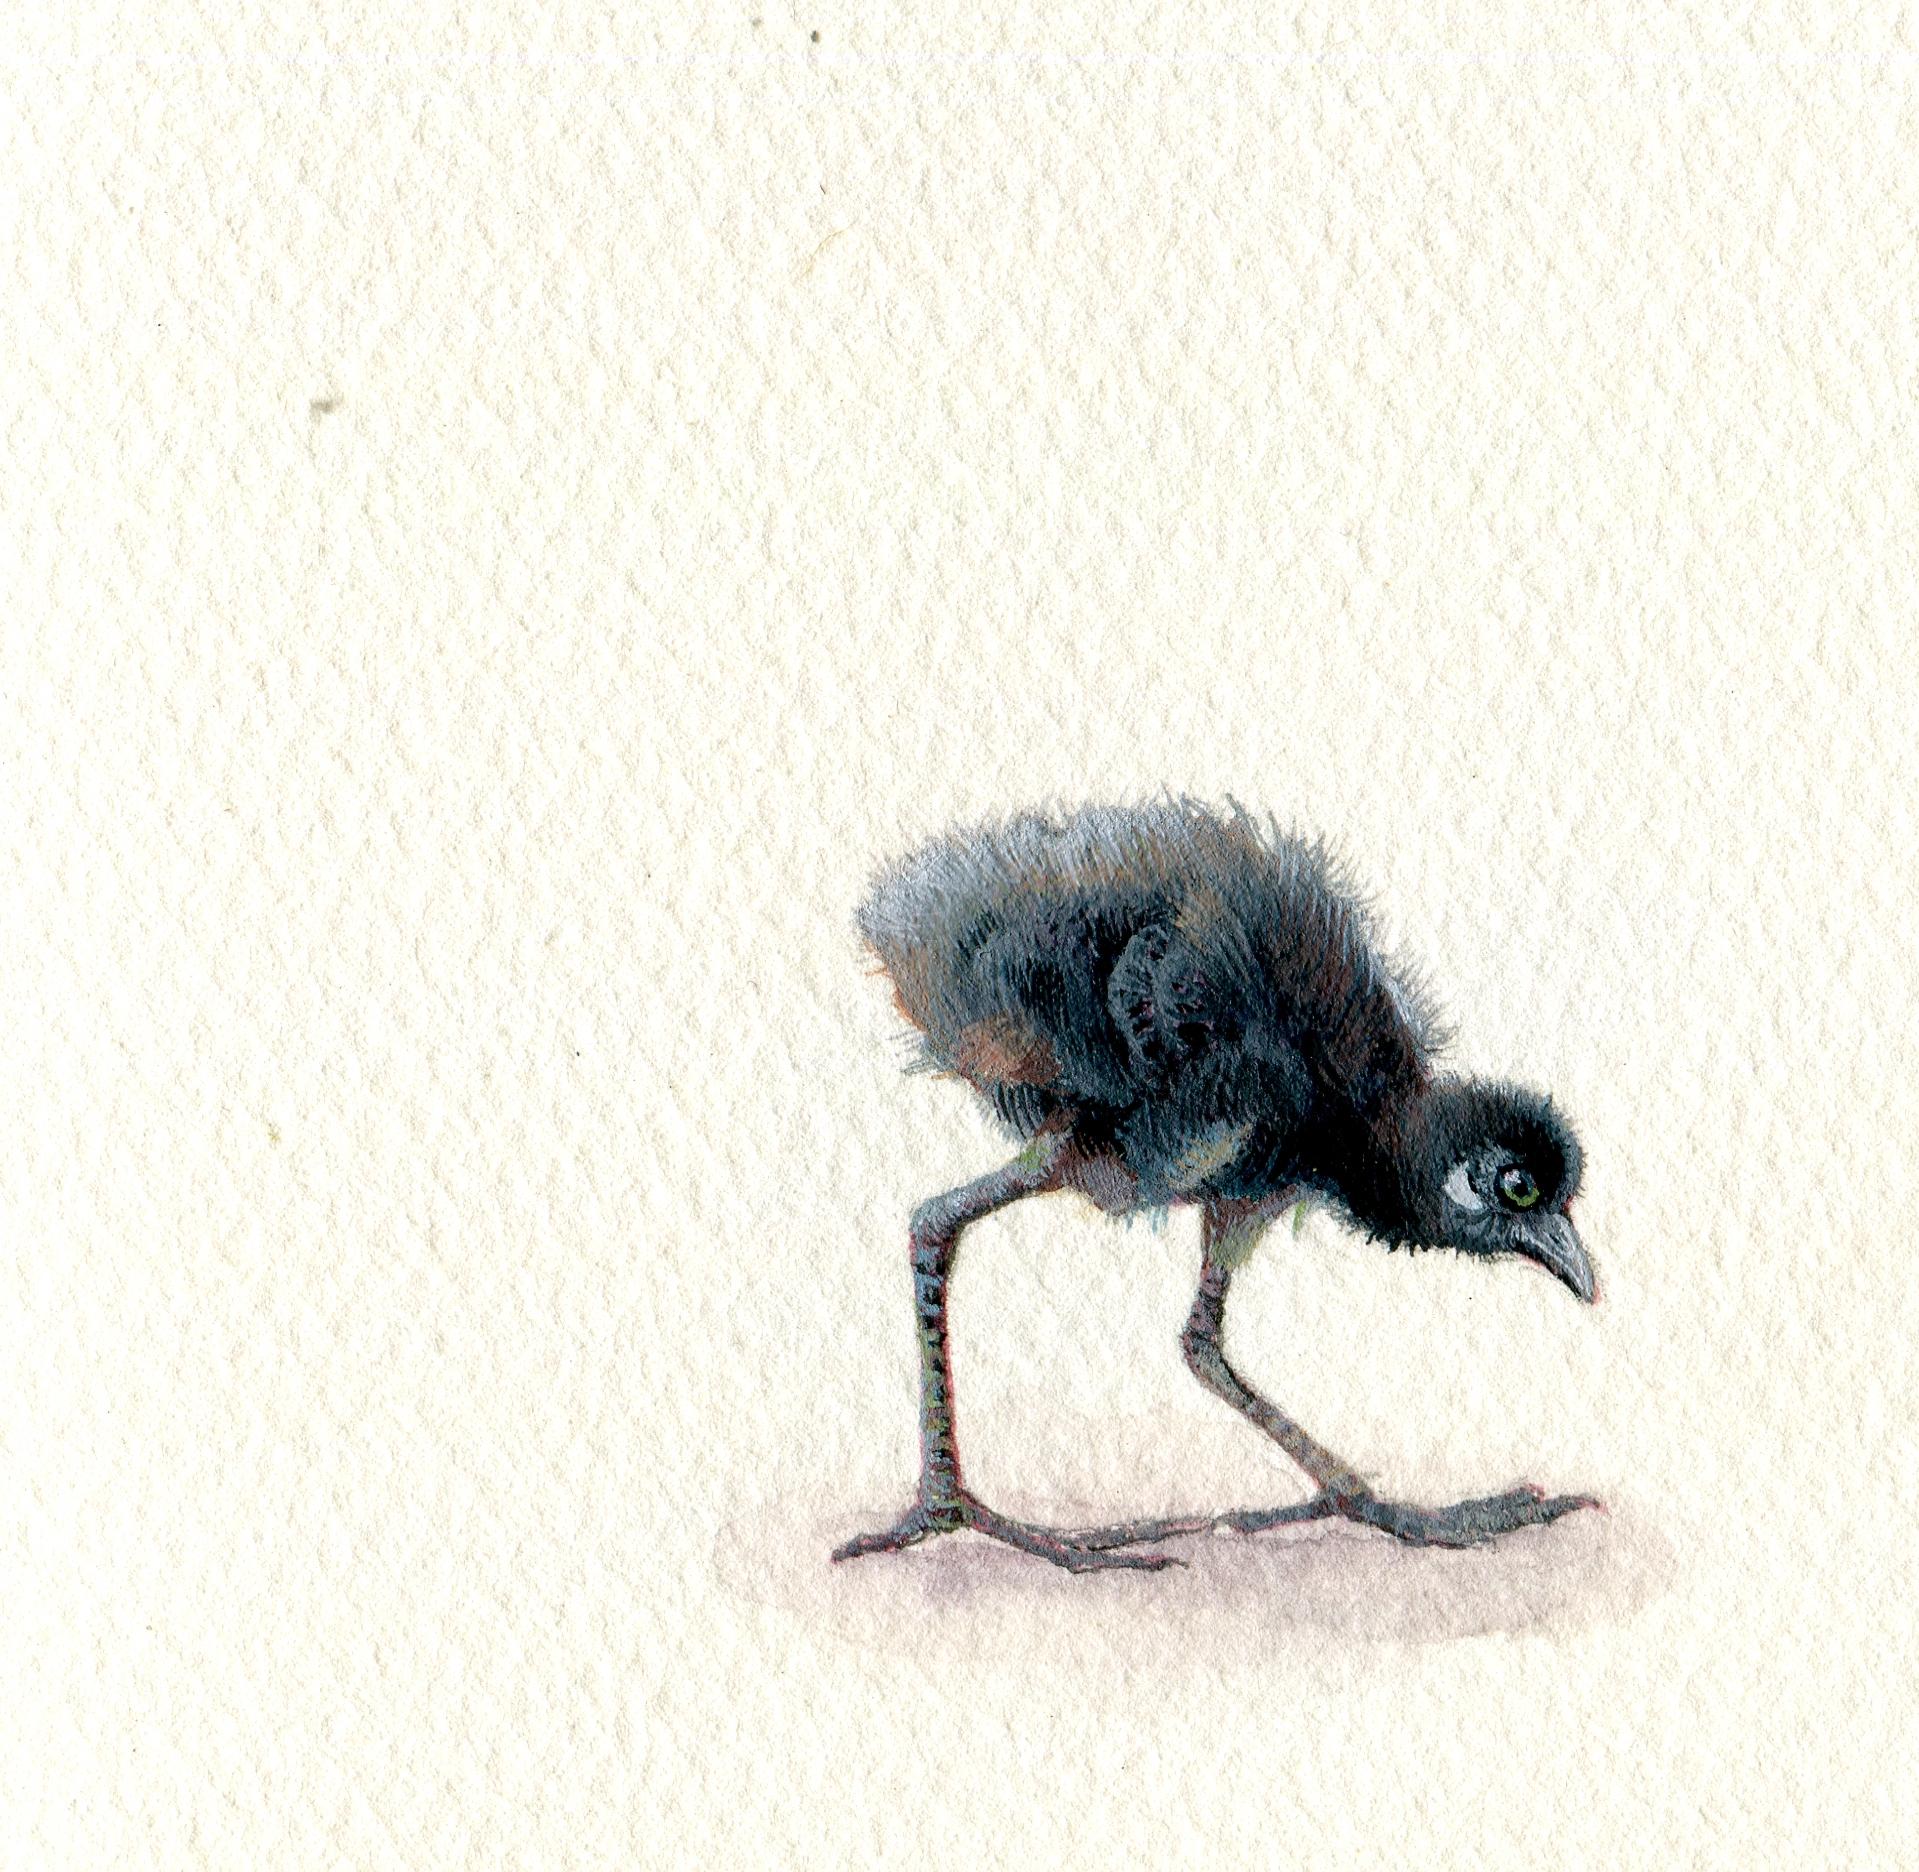 Dina Brodsky Animal Art - Waterhen Chick, realist gouache on paper miniature bird portrait, 2020